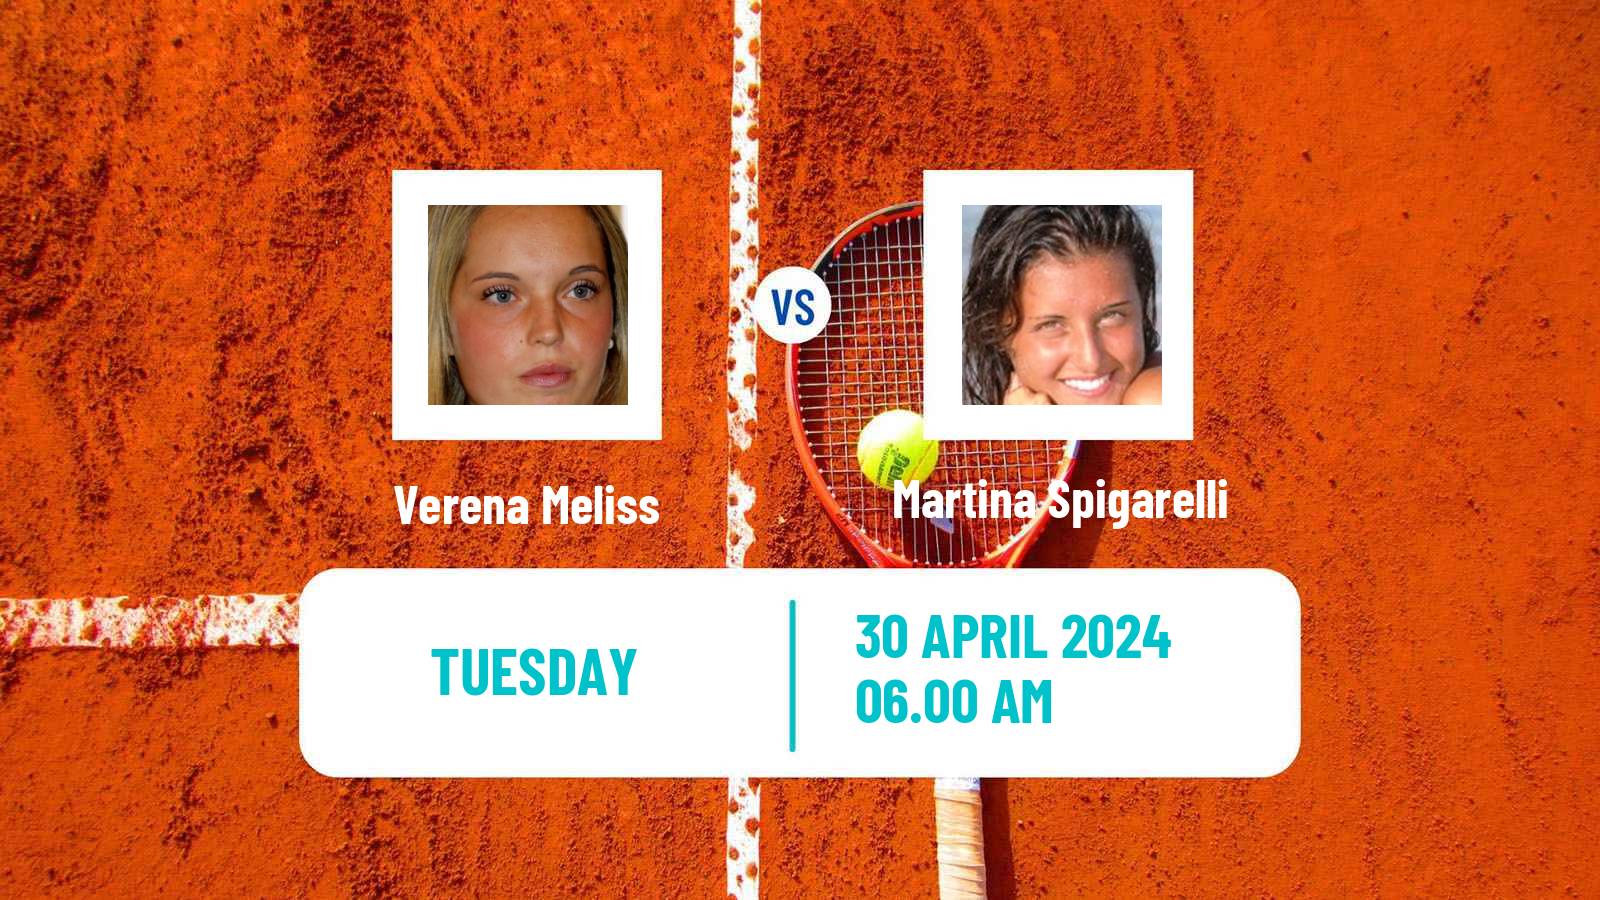 Tennis ITF W35 Santa Margherita Di Pula 6 Women Verena Meliss - Martina Spigarelli